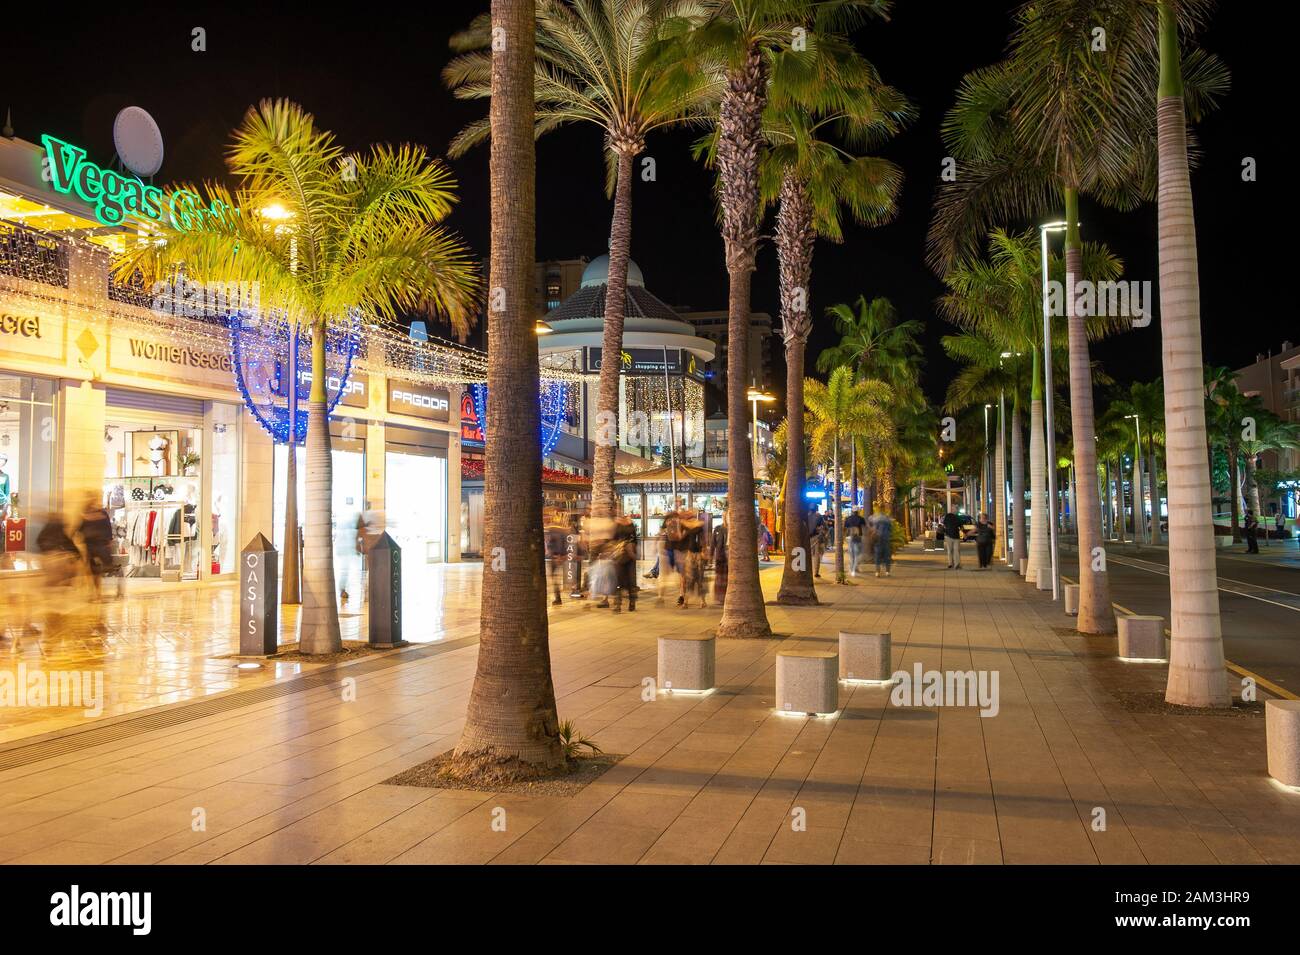 LOS CRISTIANOS - TENERIFE, SPAIN - DEC 29, 2019: Shopping center at the Boulevard Avenida de las Americas in the popular city Los Cristianos on the ca Stock Photo